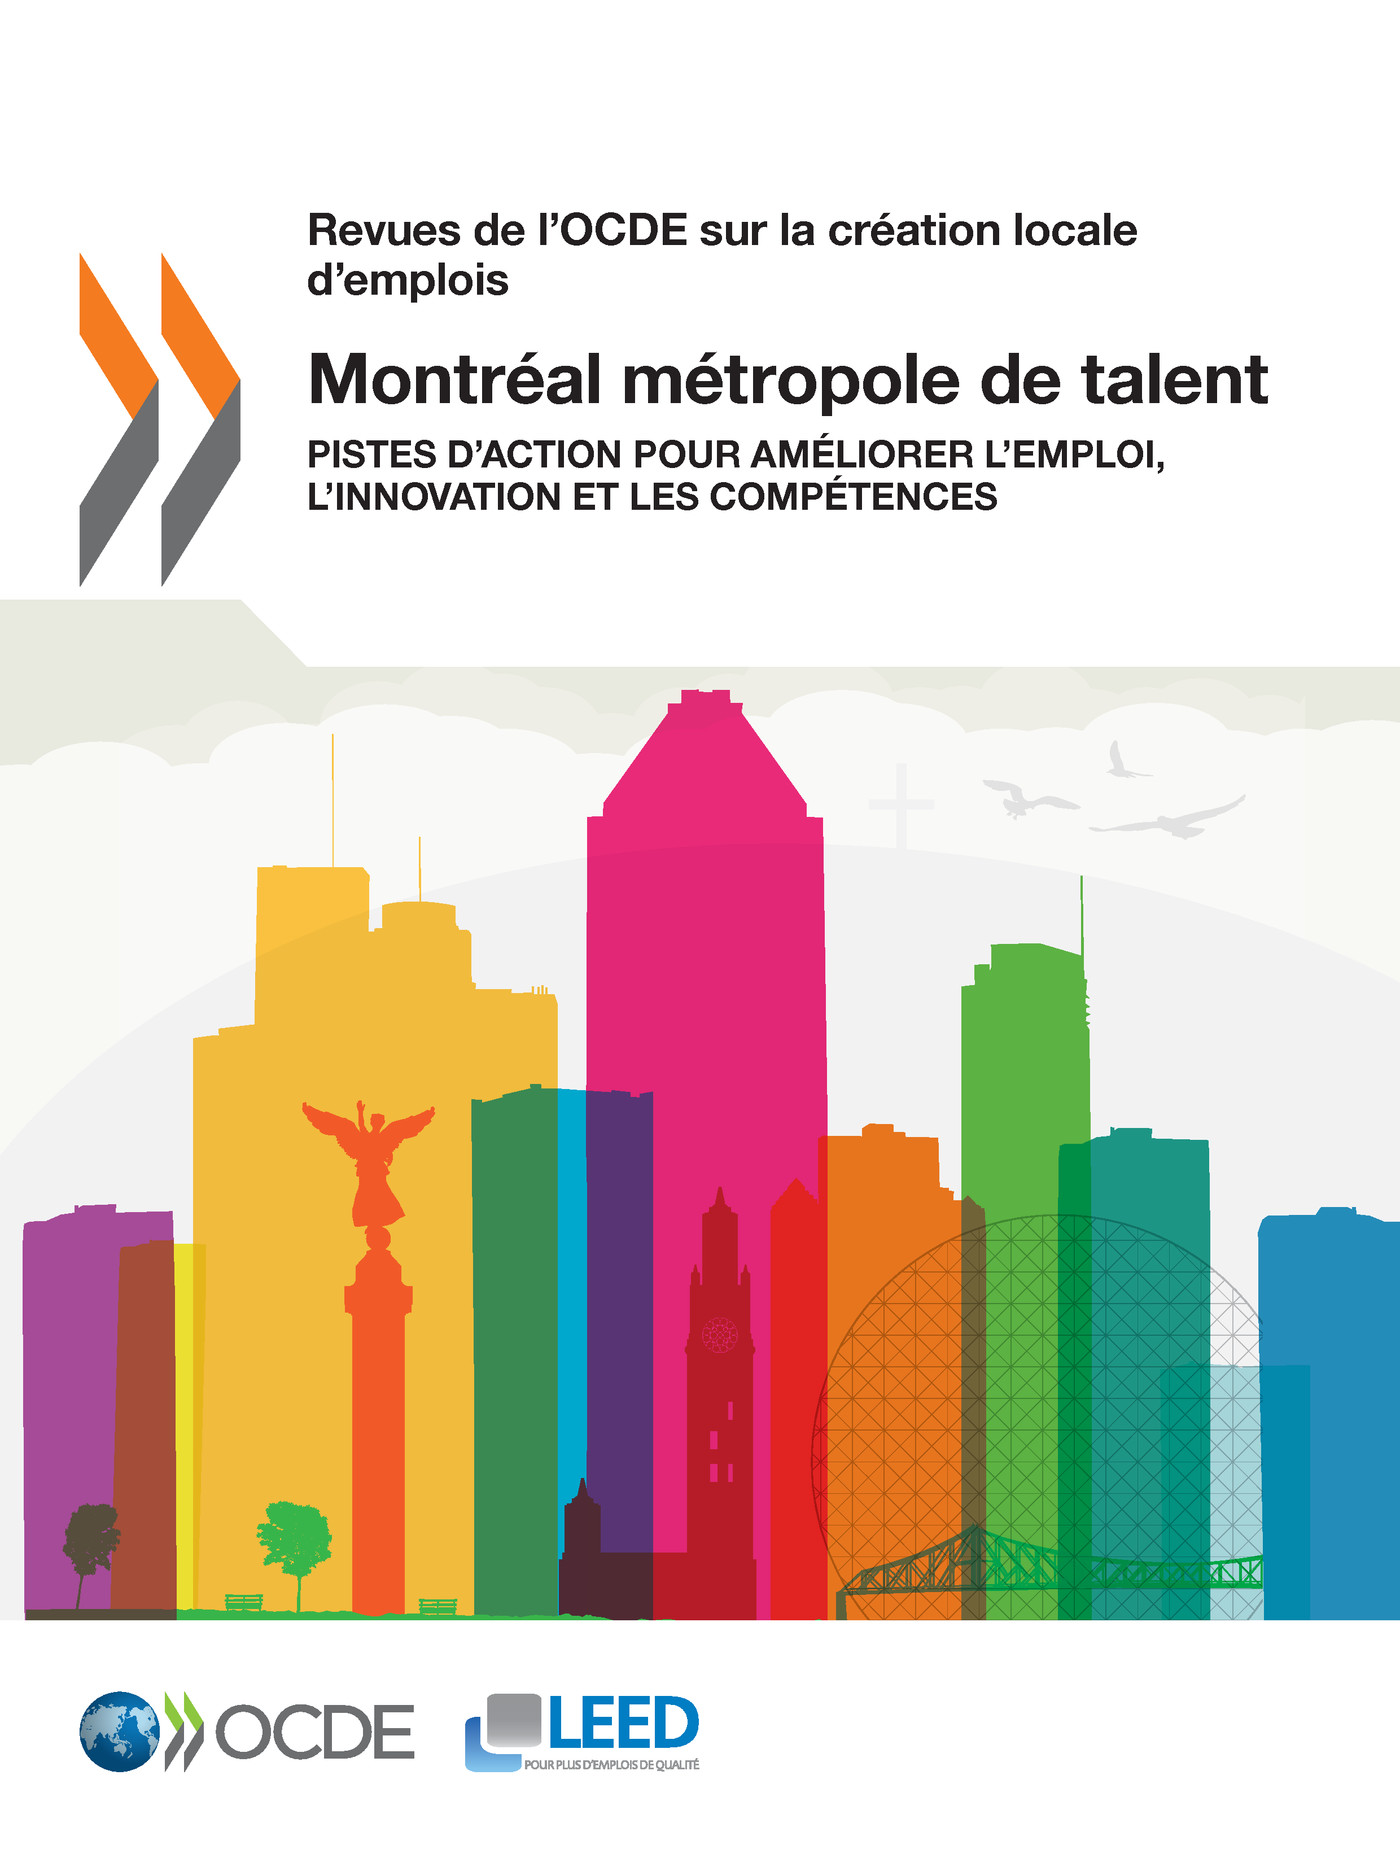 Montréal métropole de talent -  Collectif - OCDE / OECD